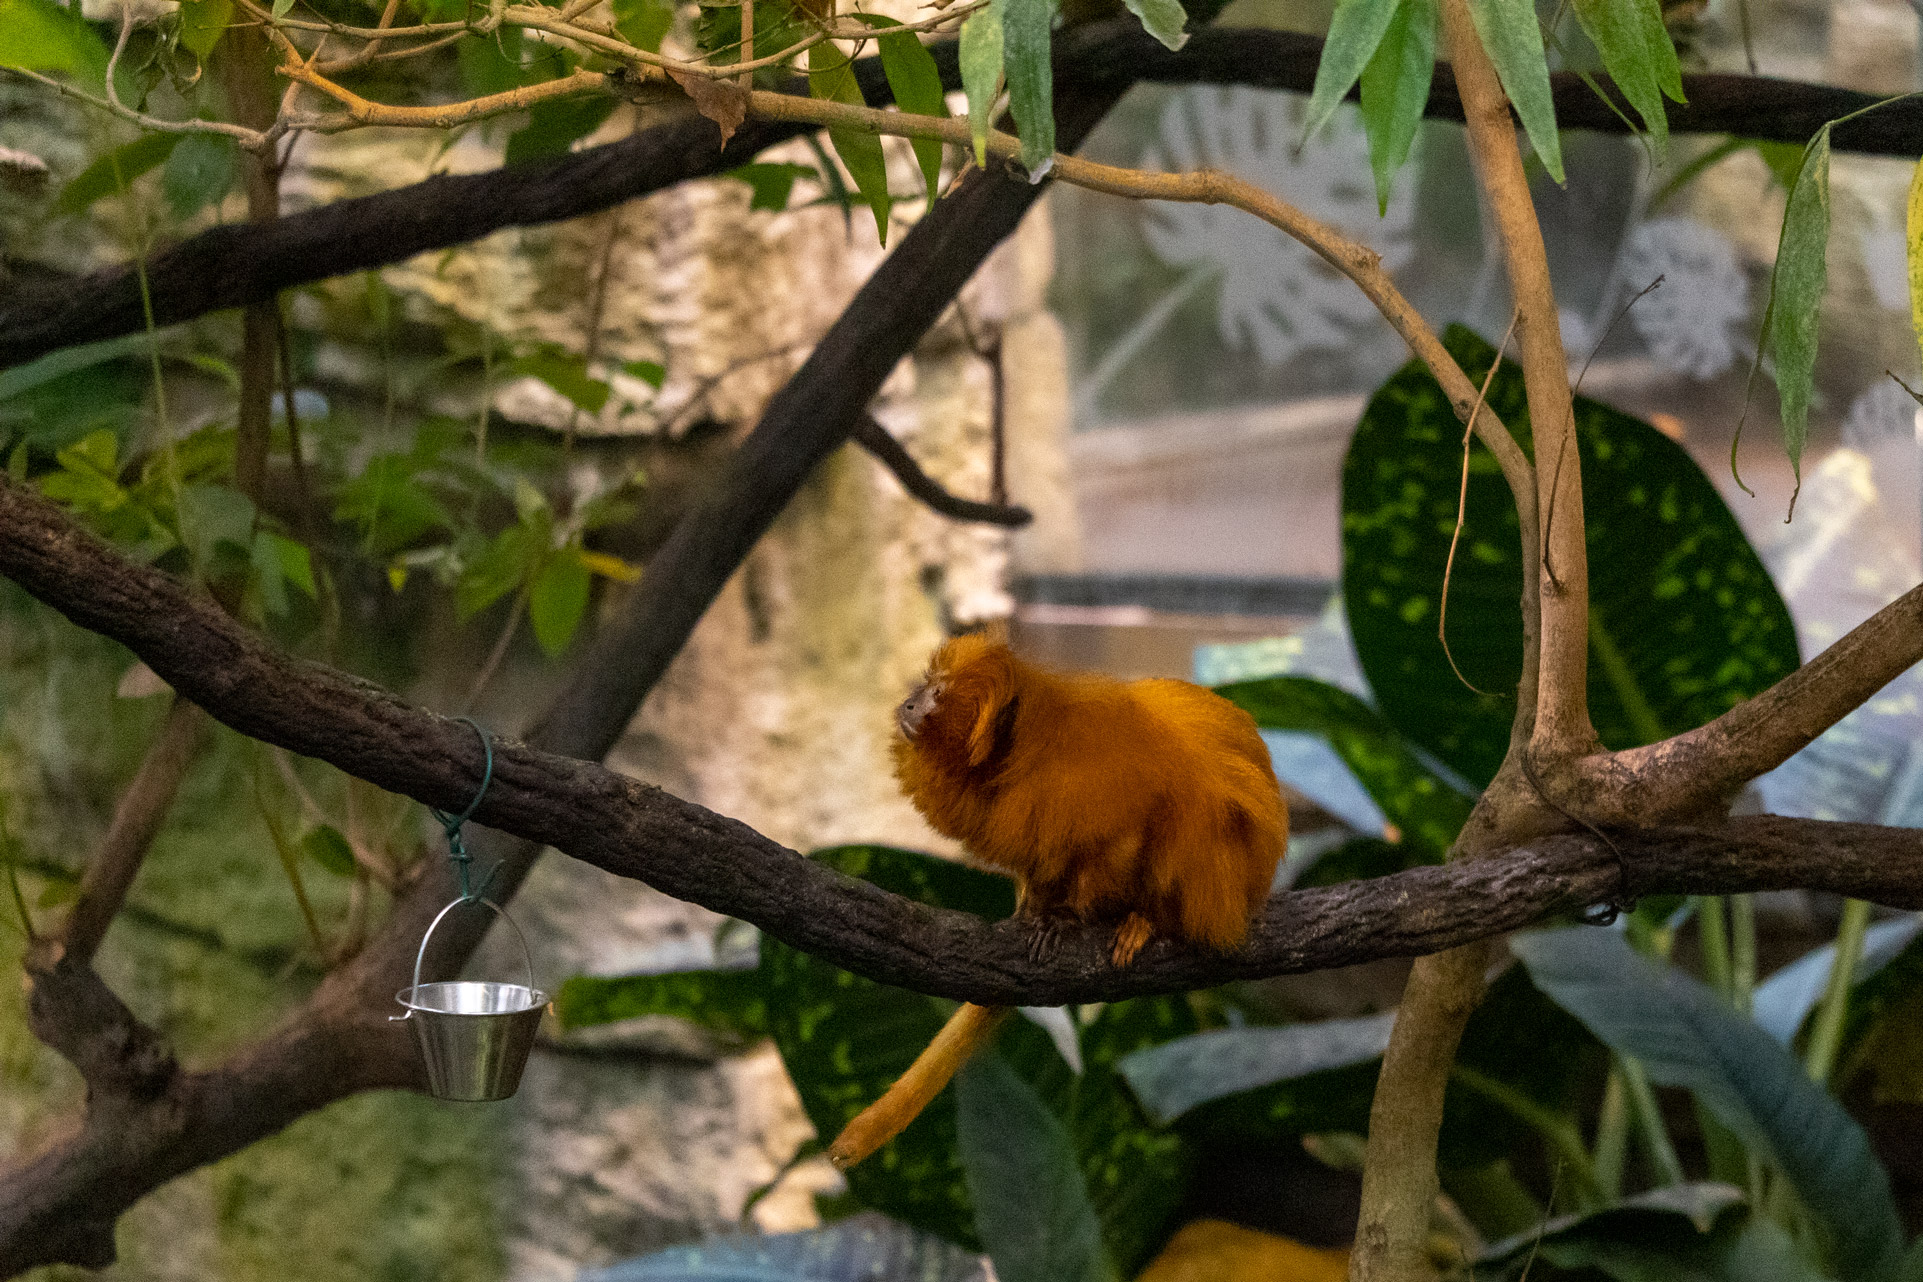 Small orange monkey on a tree branch